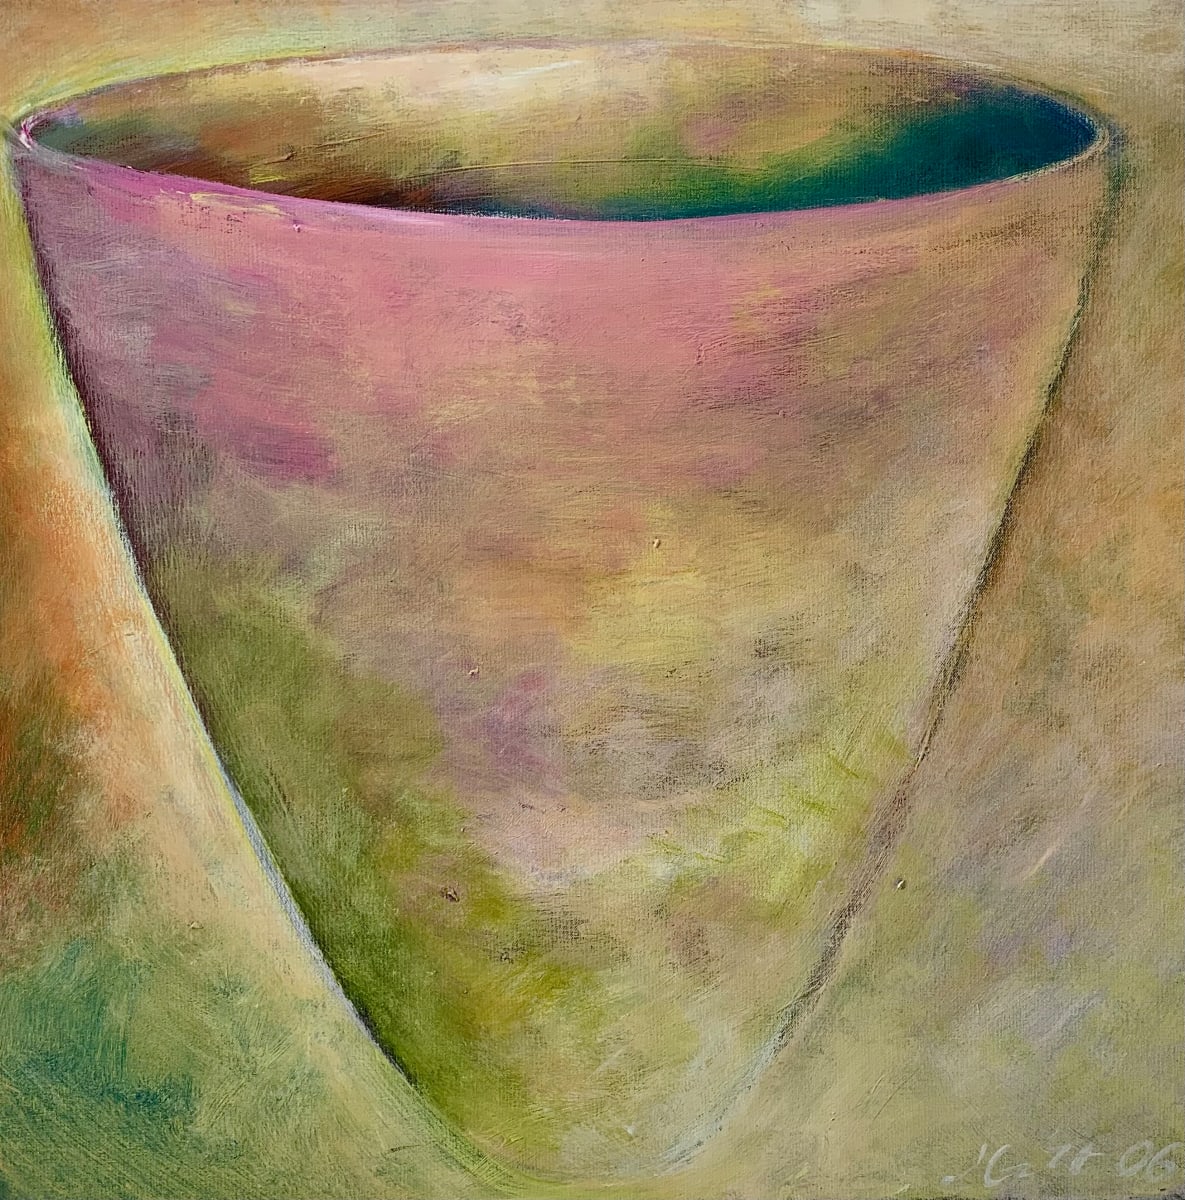 1054 Nothing Cup by Judy Gittelsohn 